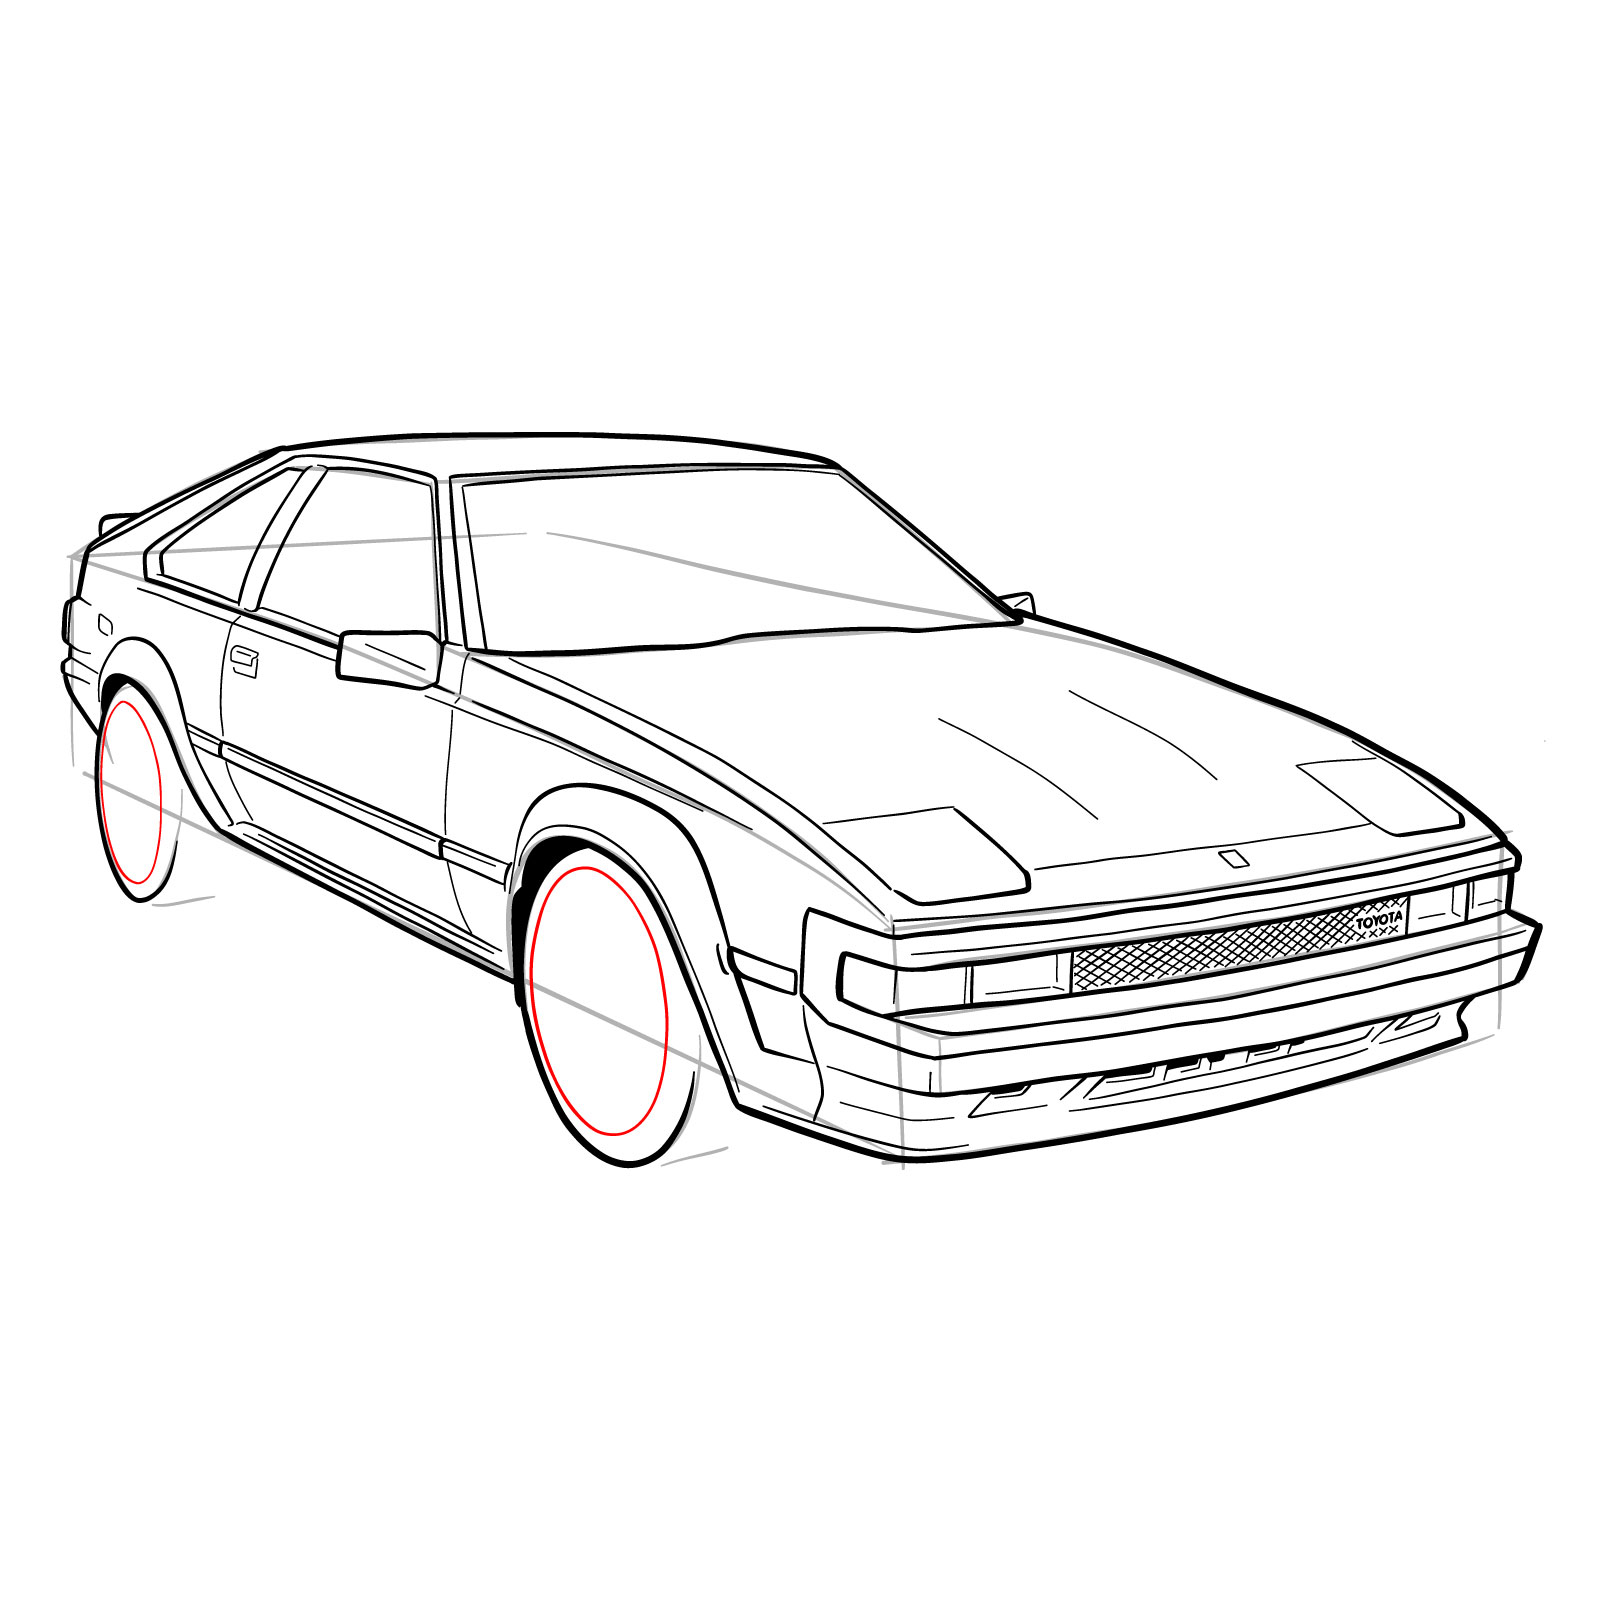 How to draw a 1985 Toyota Celica Supra P Type MK 2 - step 34